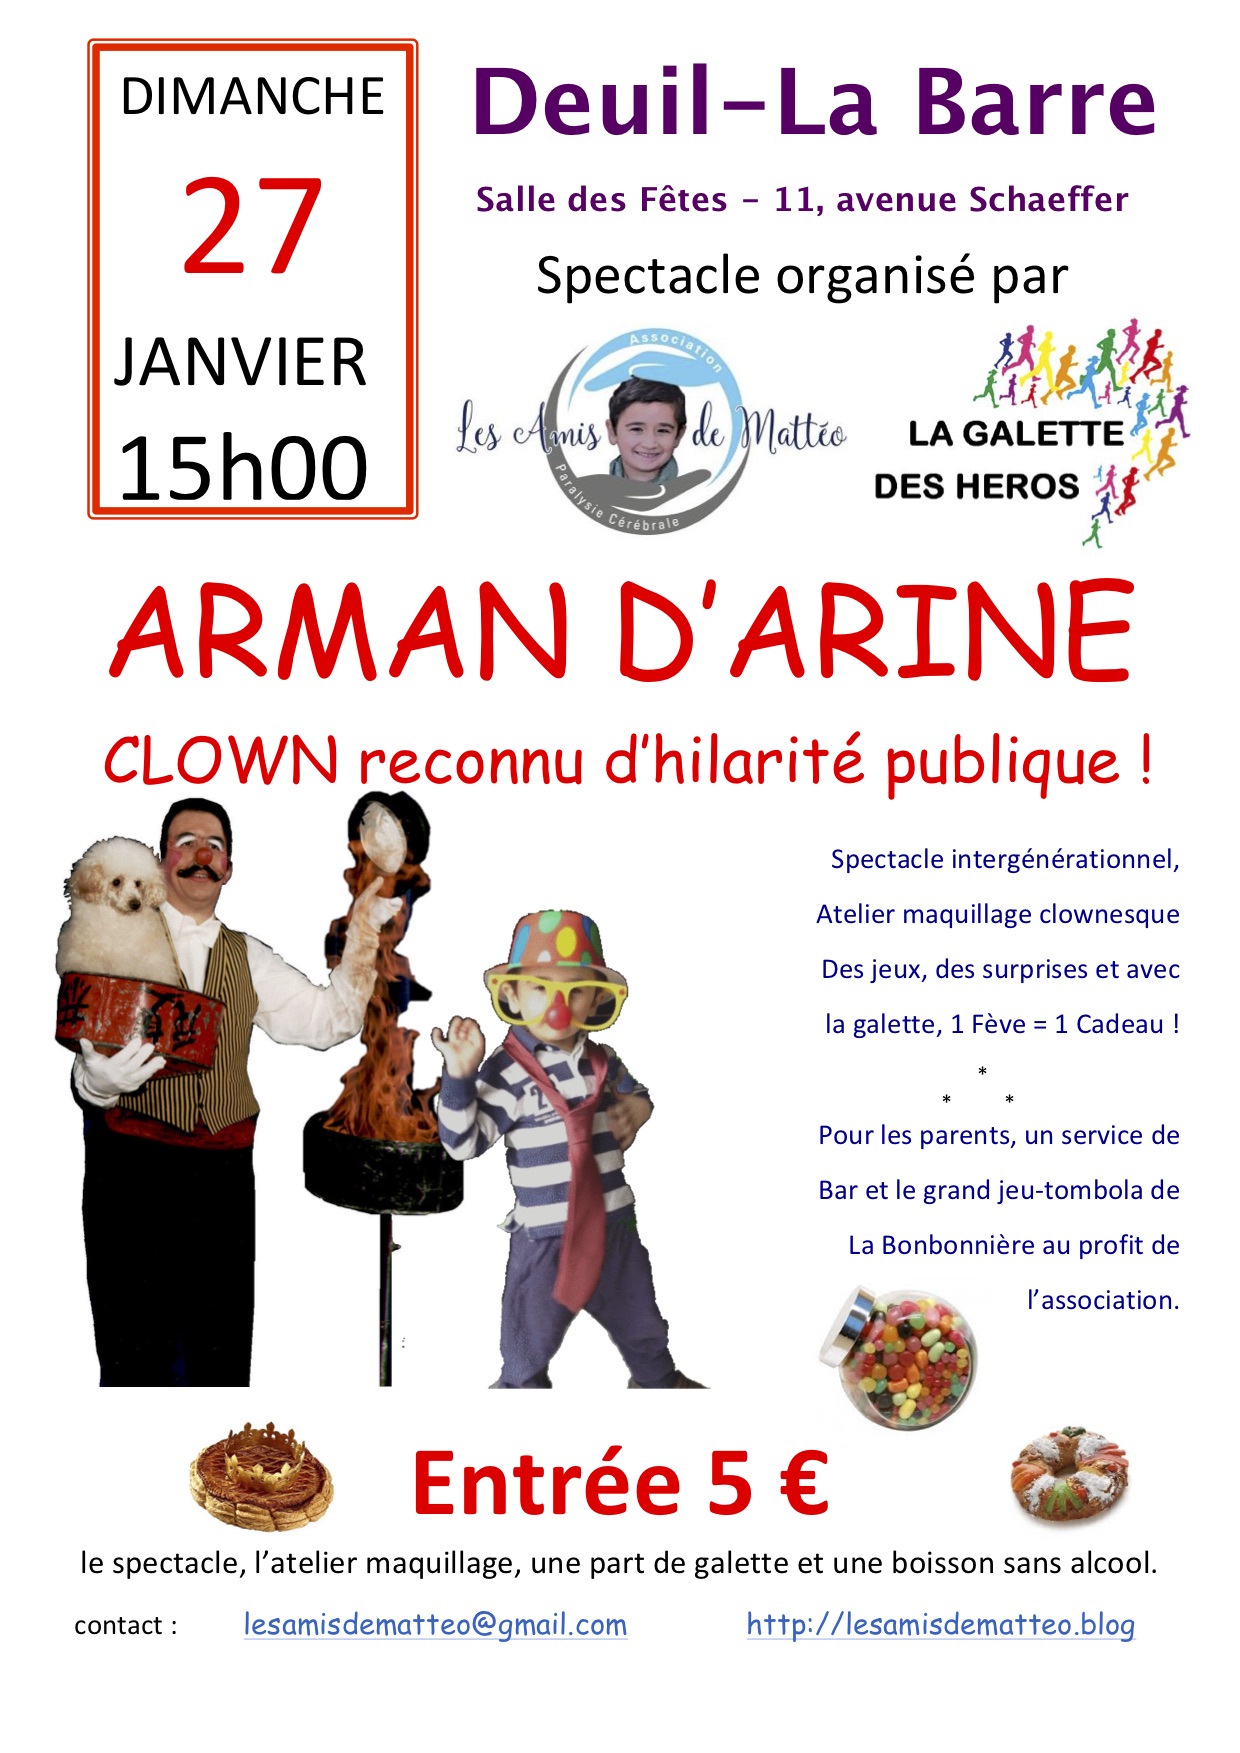 Arman d'Arine